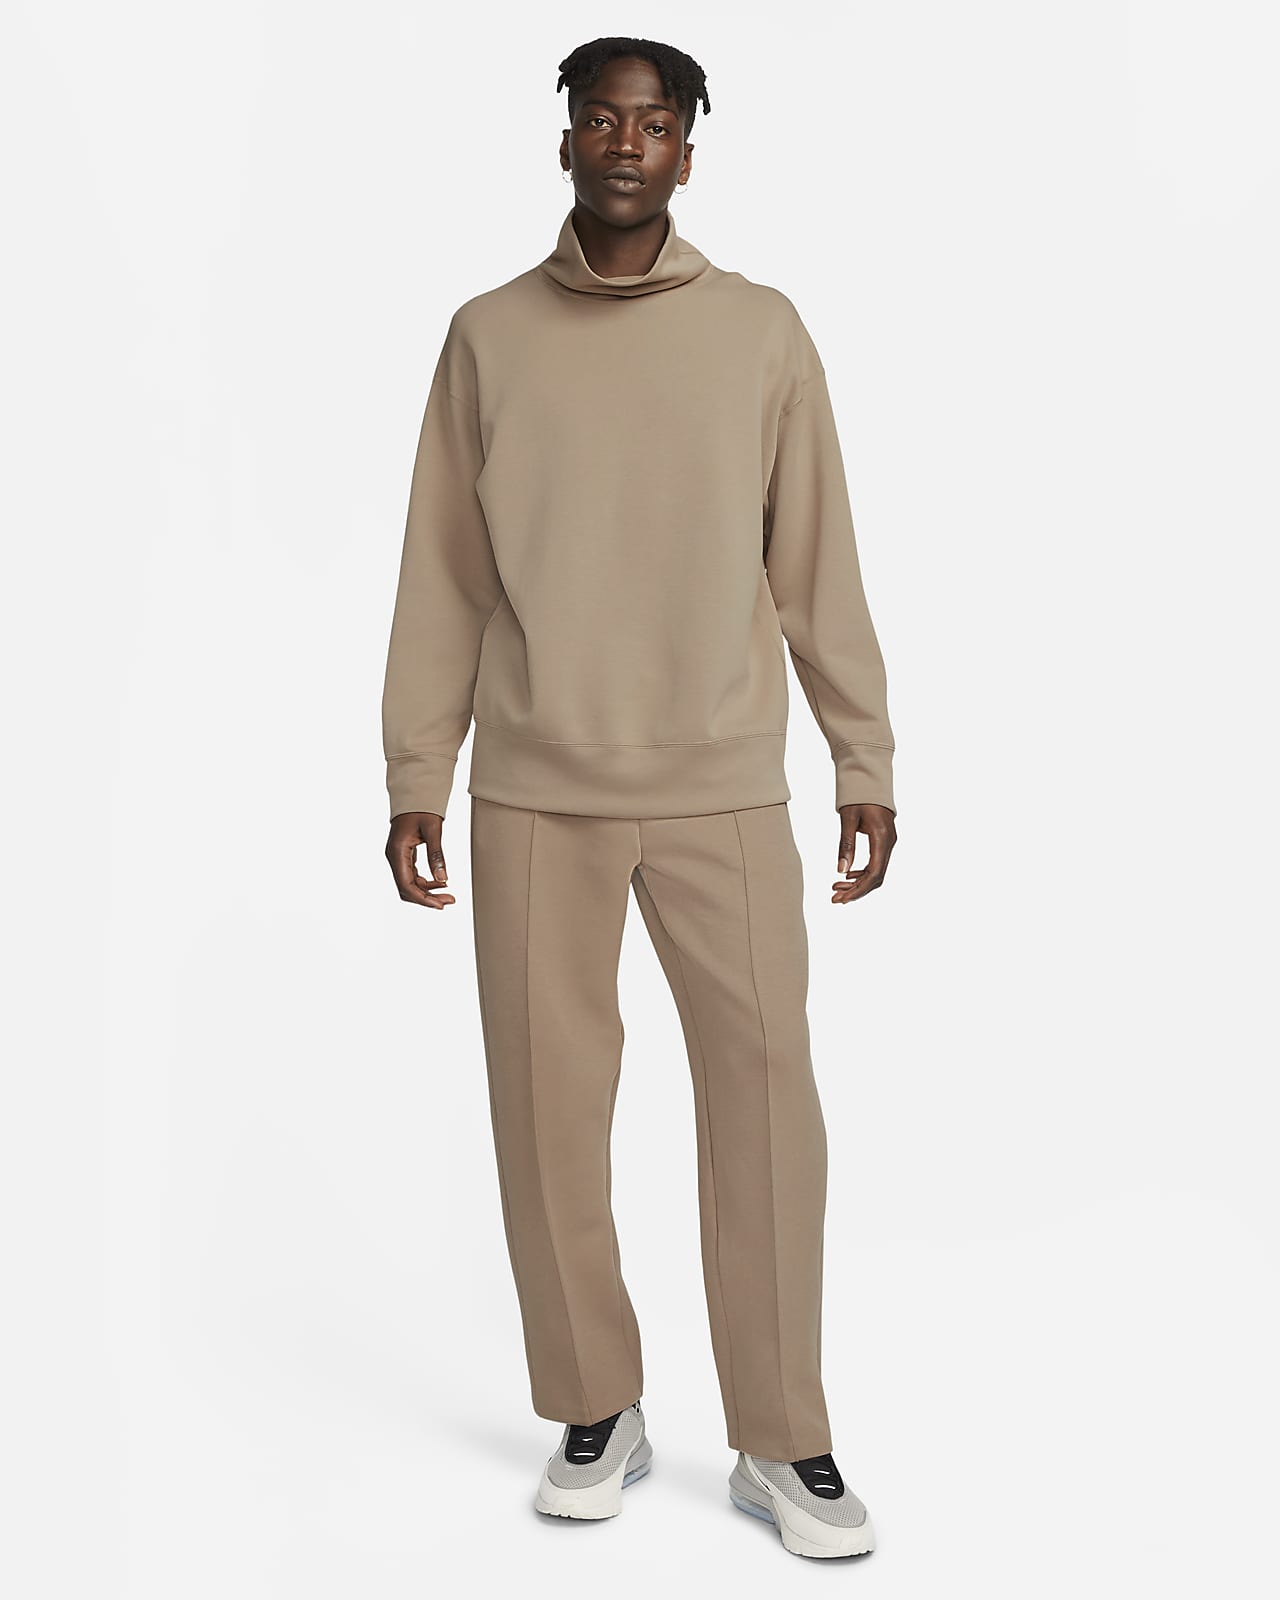 NIKE Tapered Cotton-Blend Tech Fleece Sweatpants for Men